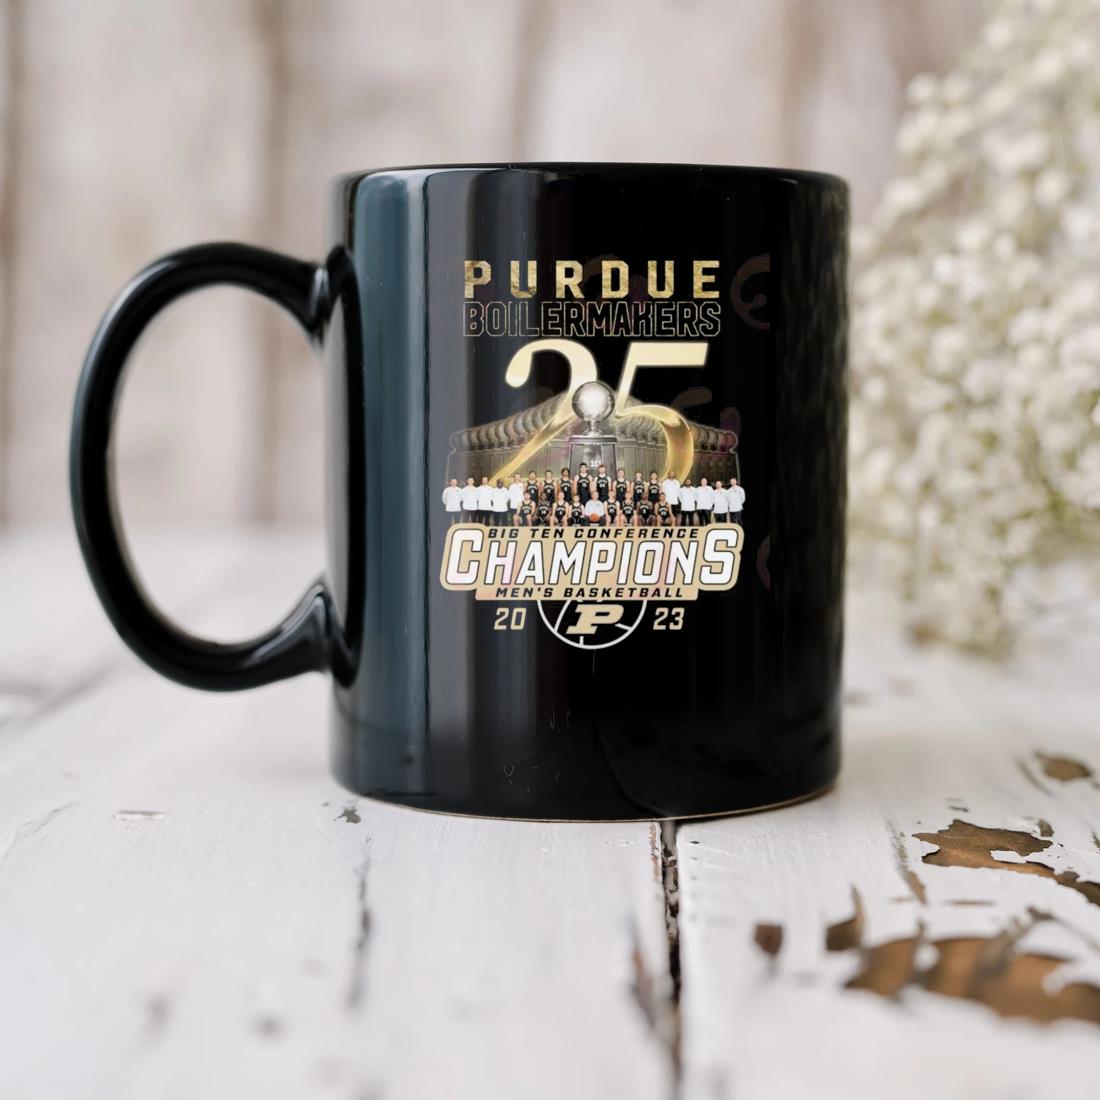 Purdue Boilermakers Big Ten Conference Champions Men's Basketball 2023 Mug